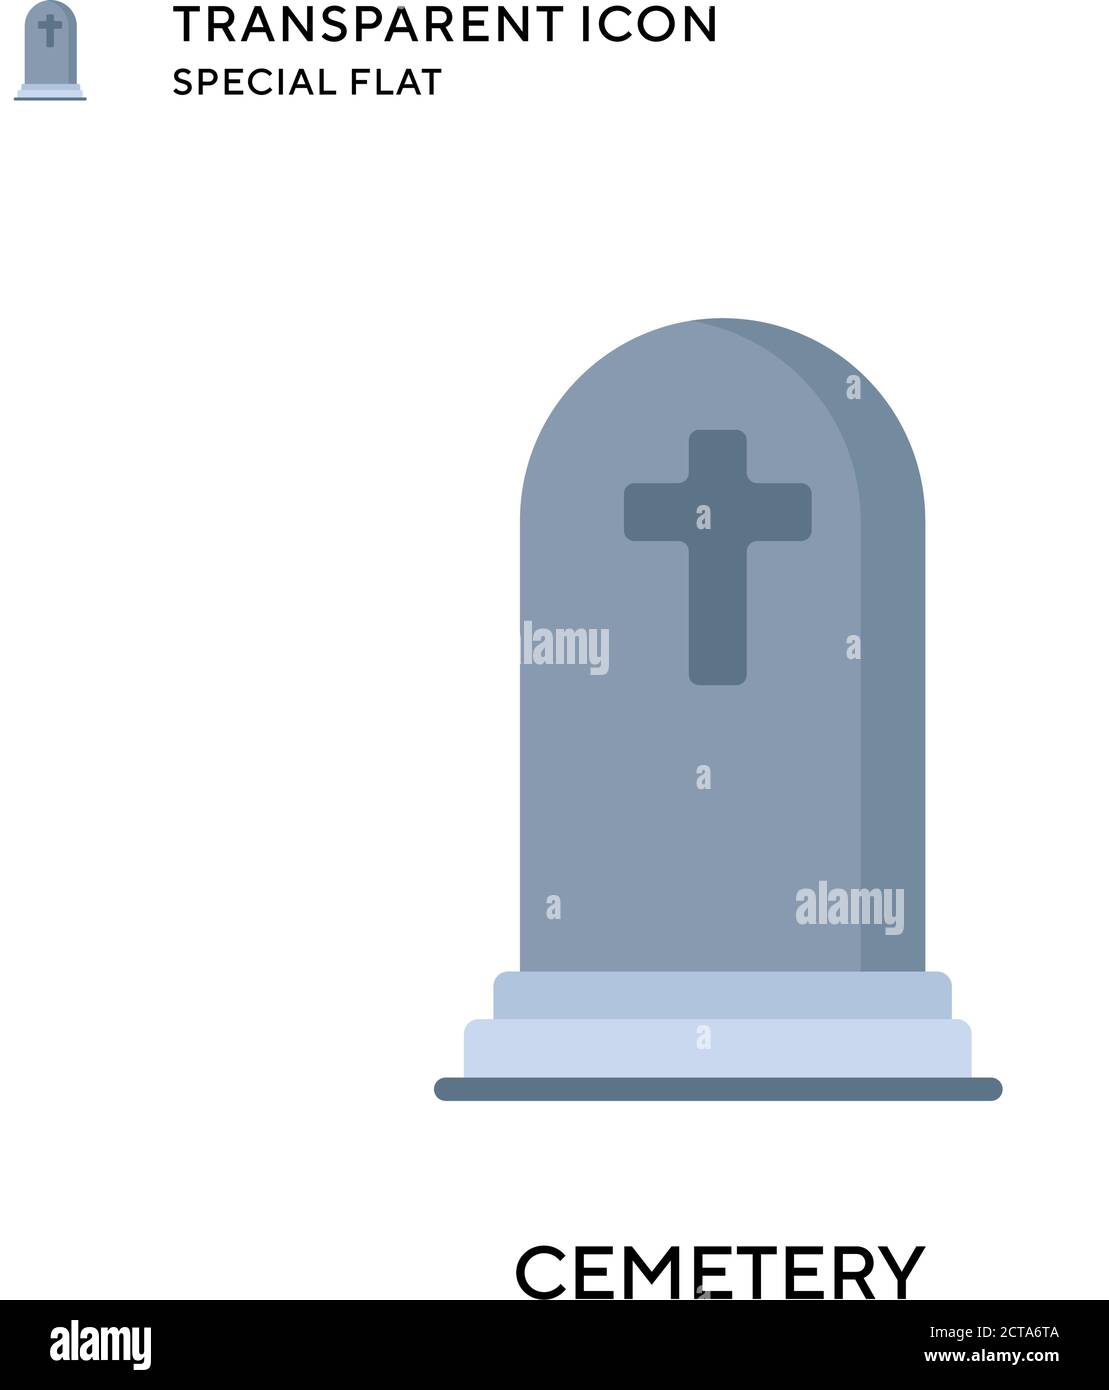 Cemetery vector icon. Flat style illustration. EPS 10 vector. Stock Vector